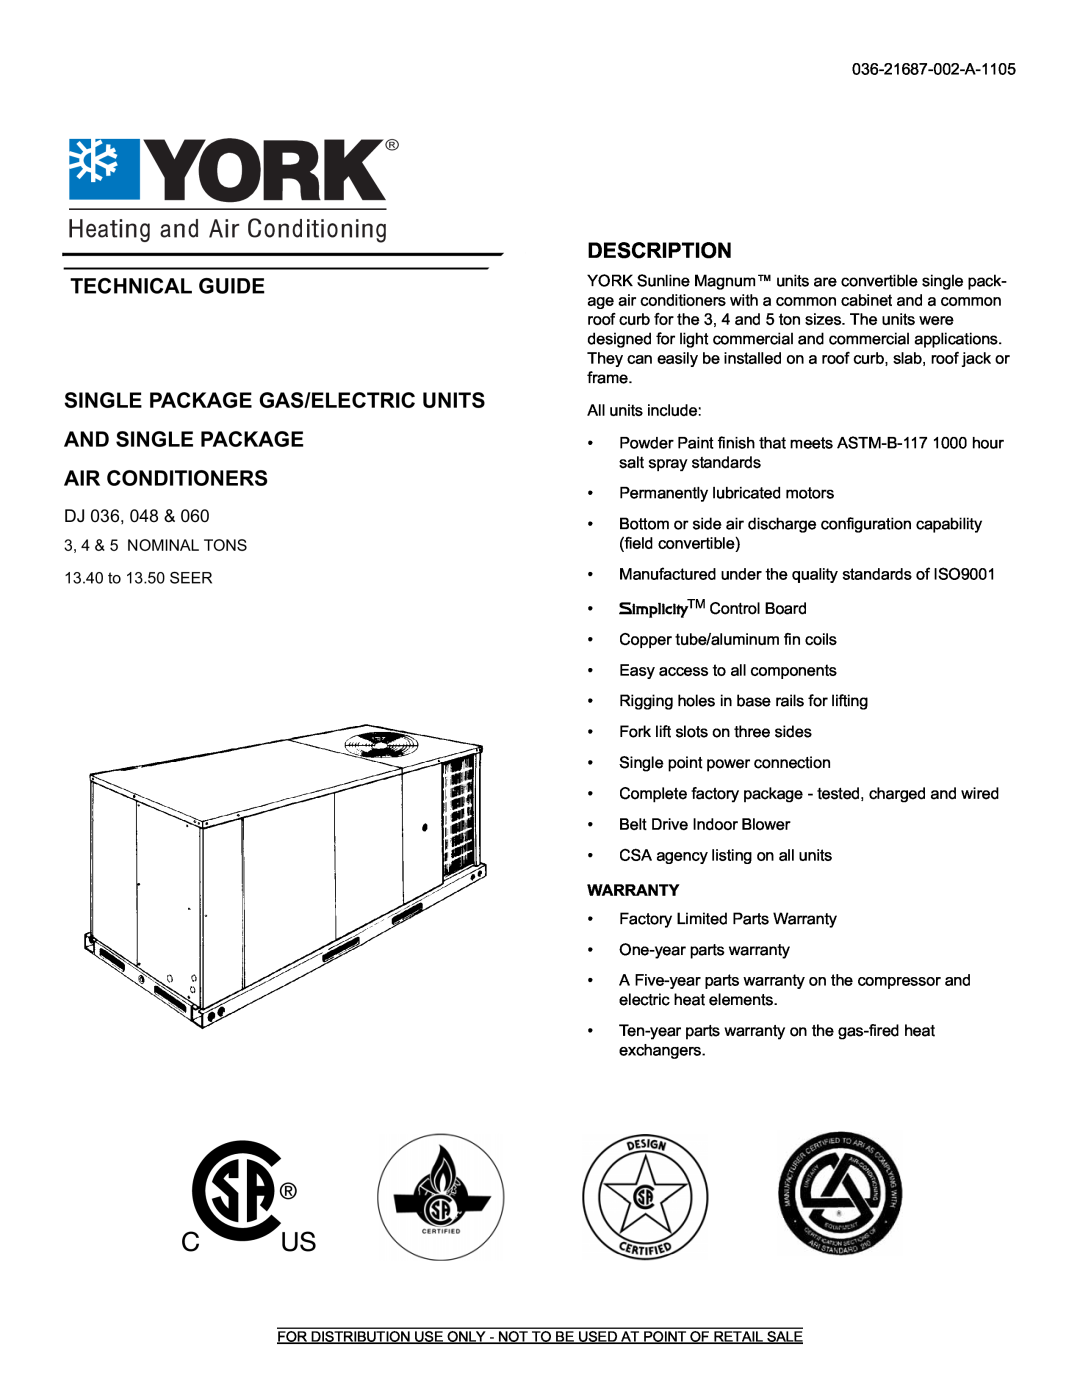 York DJ 036, DJ 048, DJ 060 warranty Technical Guide, Air Conditioners, Description, Dj, Warranty 